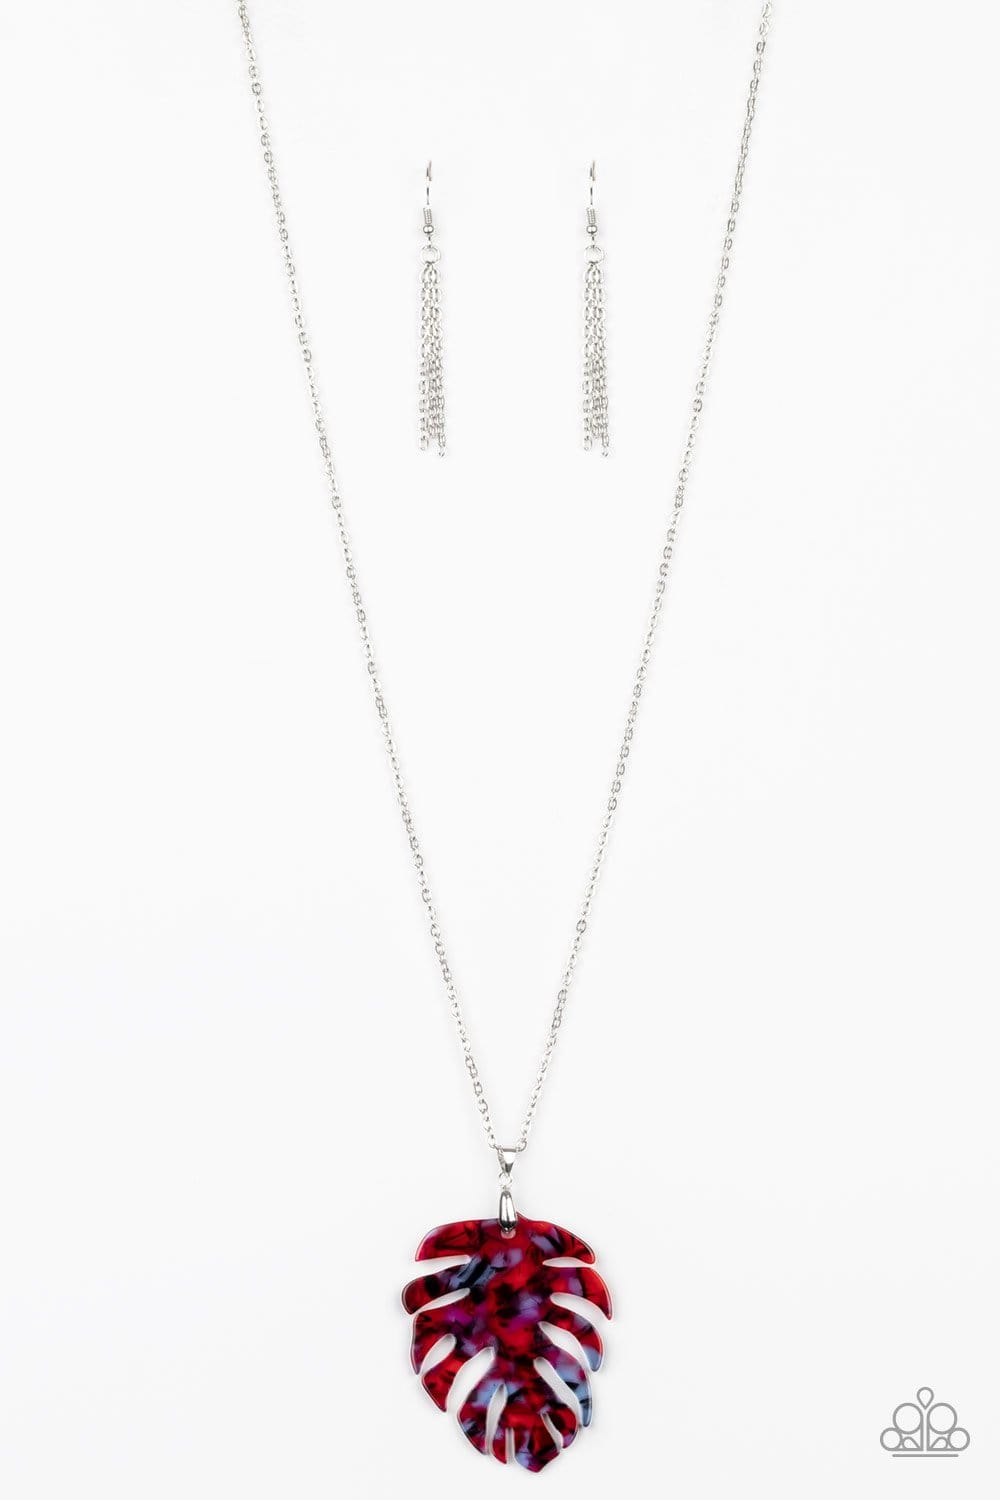 Prismatic Palms - Red - Paparazzi necklace